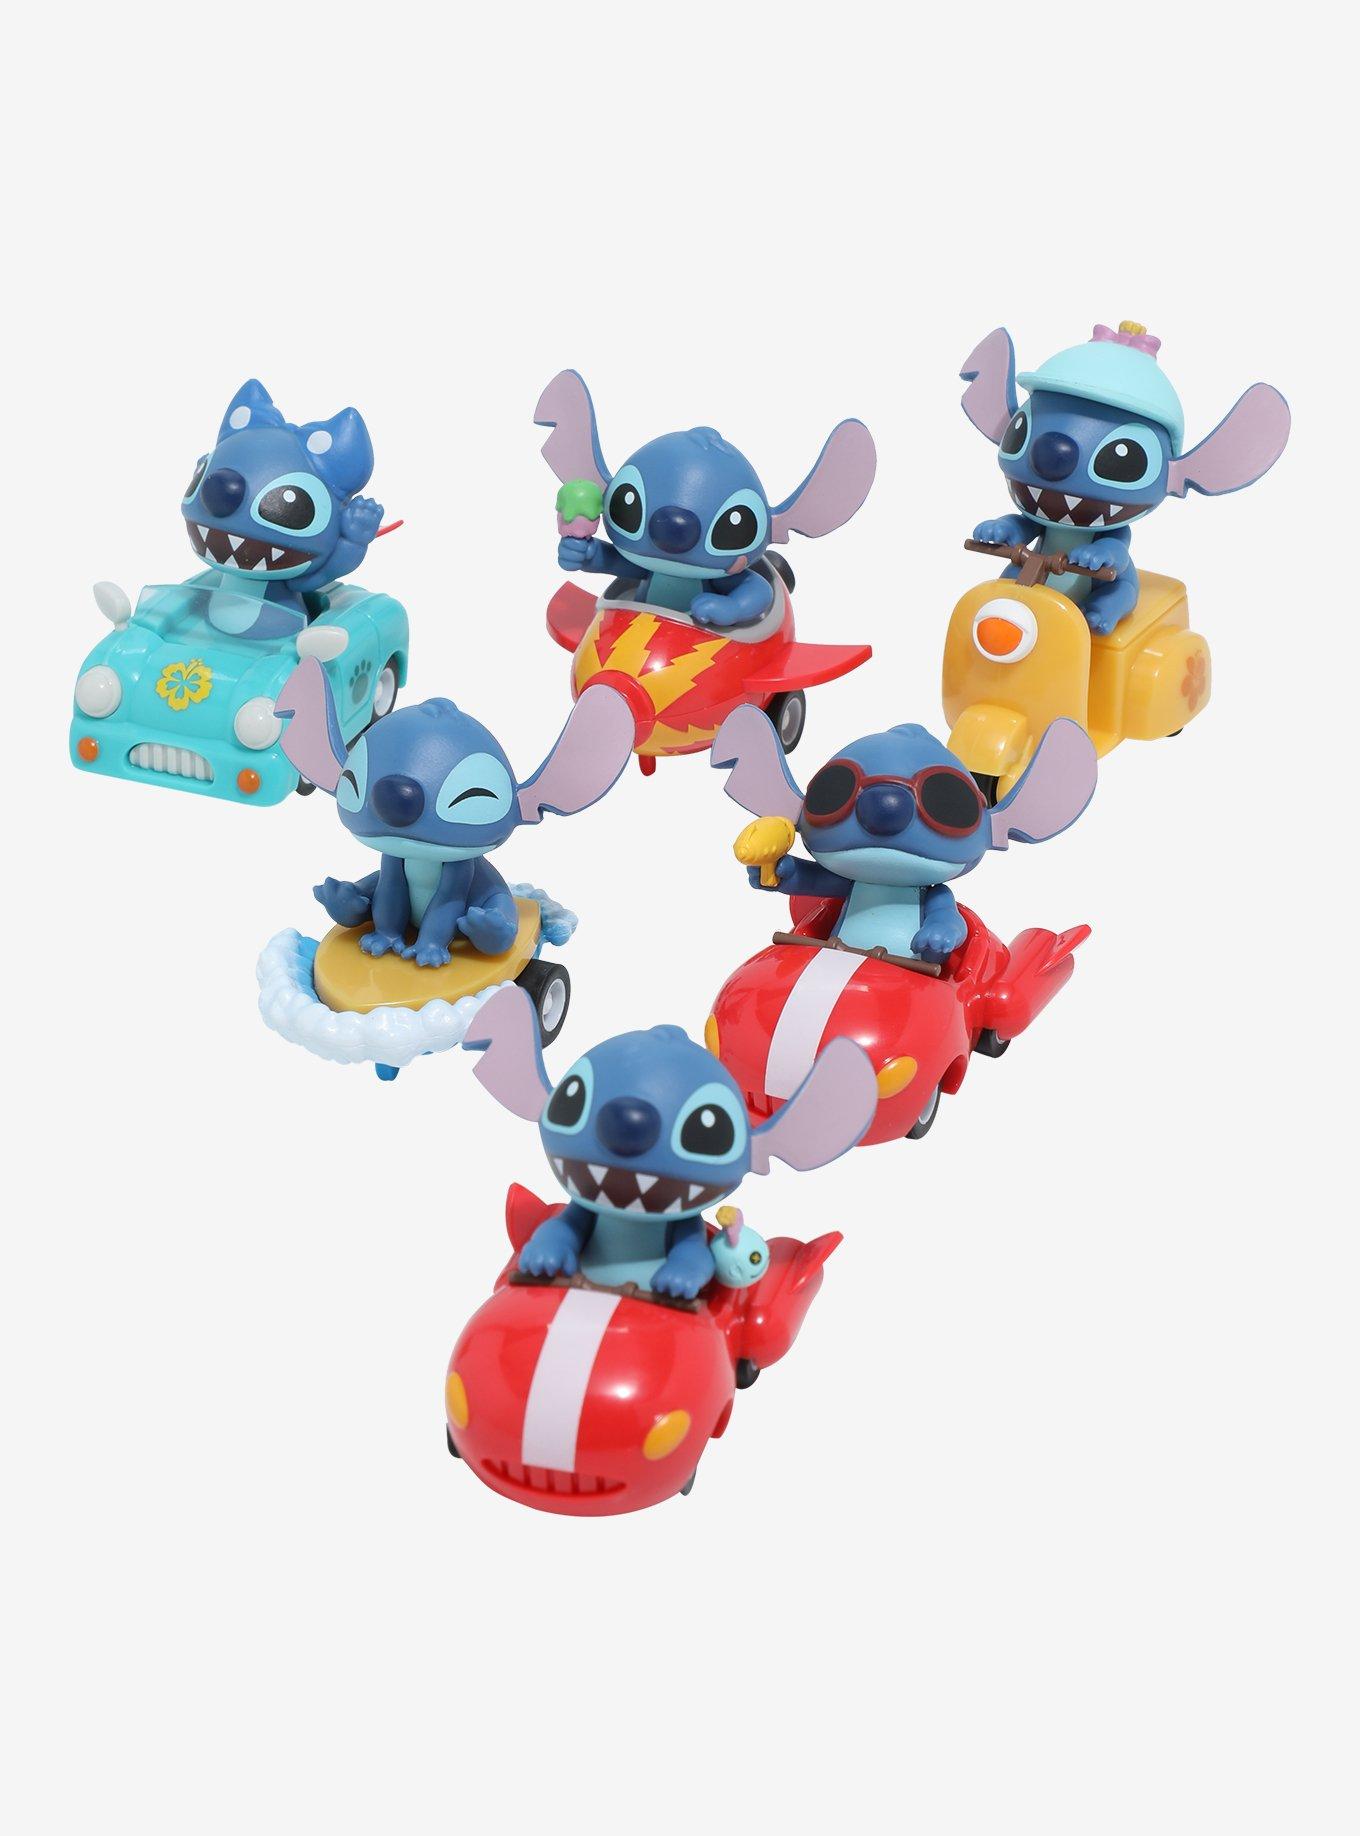 Disney Lilo & Stitch VOITURE STITCH HAWAII CAR Pull Back & Go 4.5 Friction  Toy